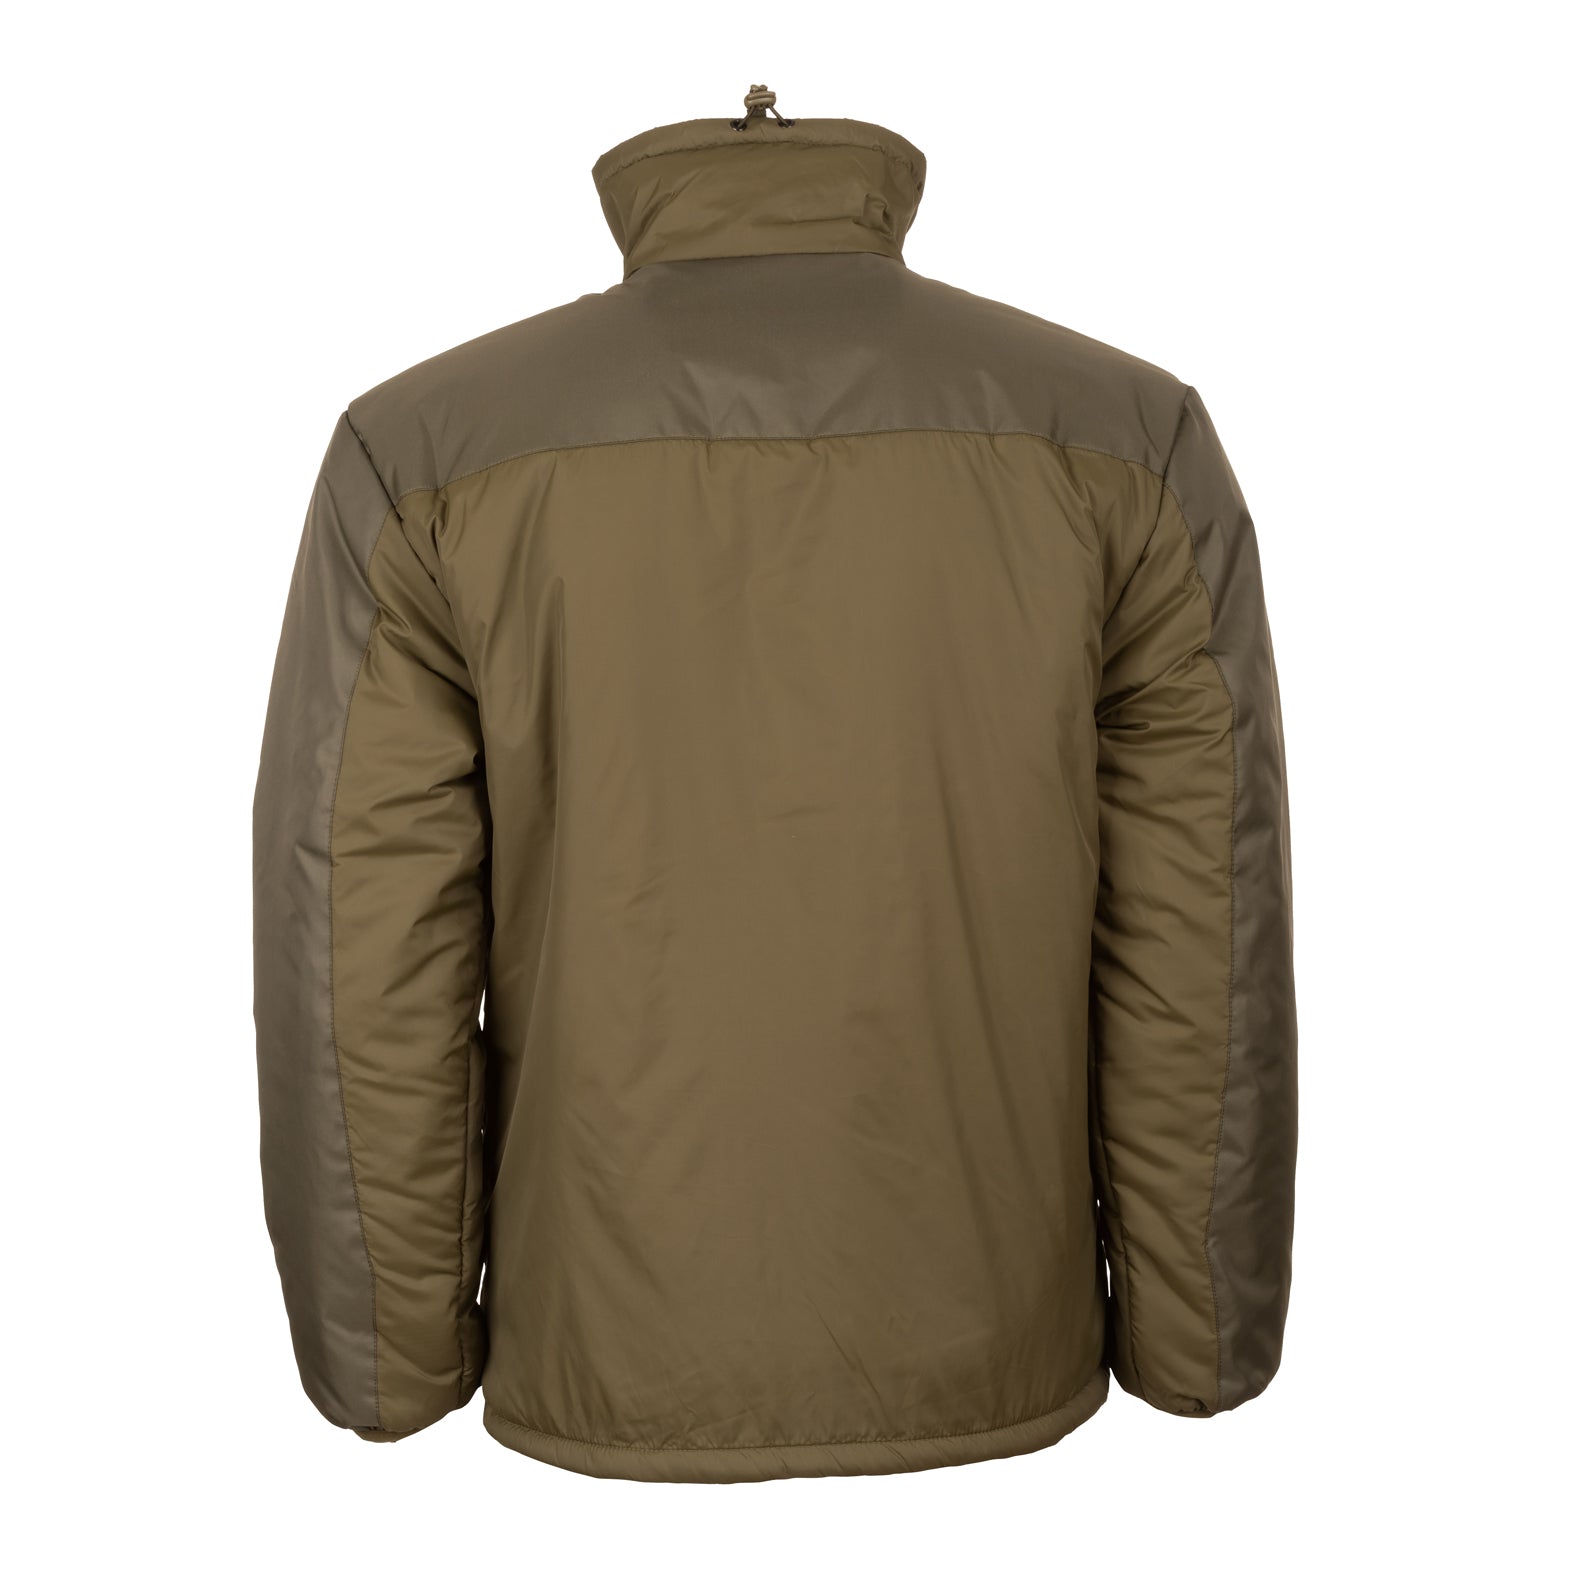 Snugpak Sleeka Elite Insulated Jacket